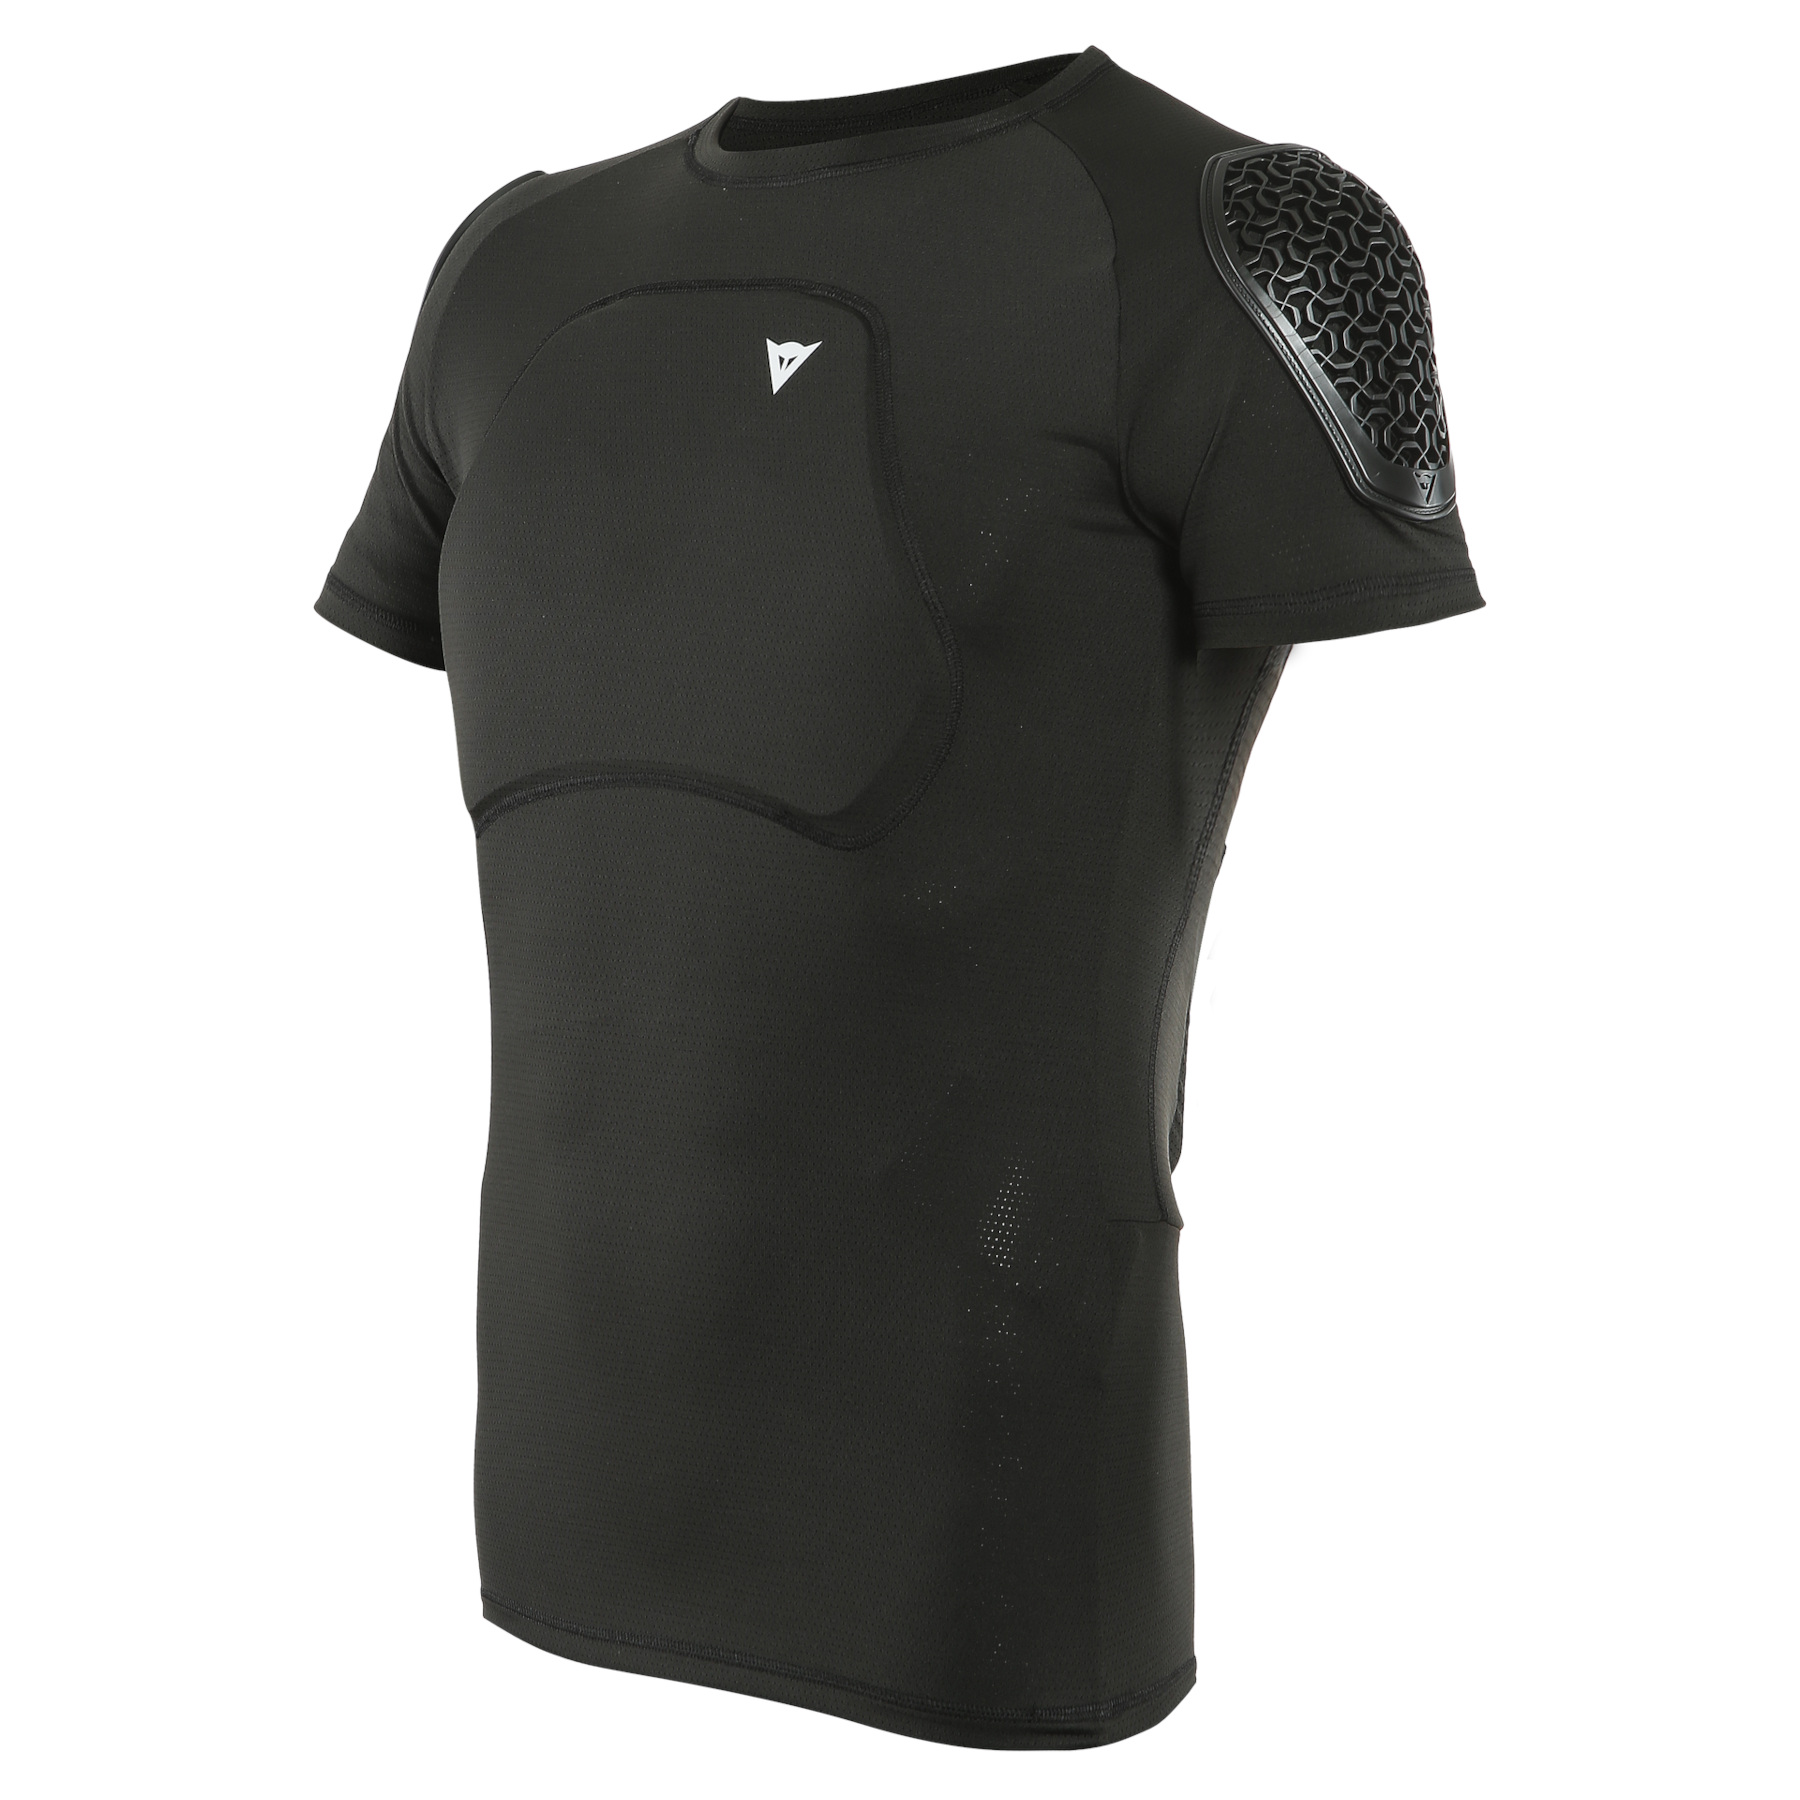 Productfoto van Dainese Trail Skins Pro Protector Shirt - zwart